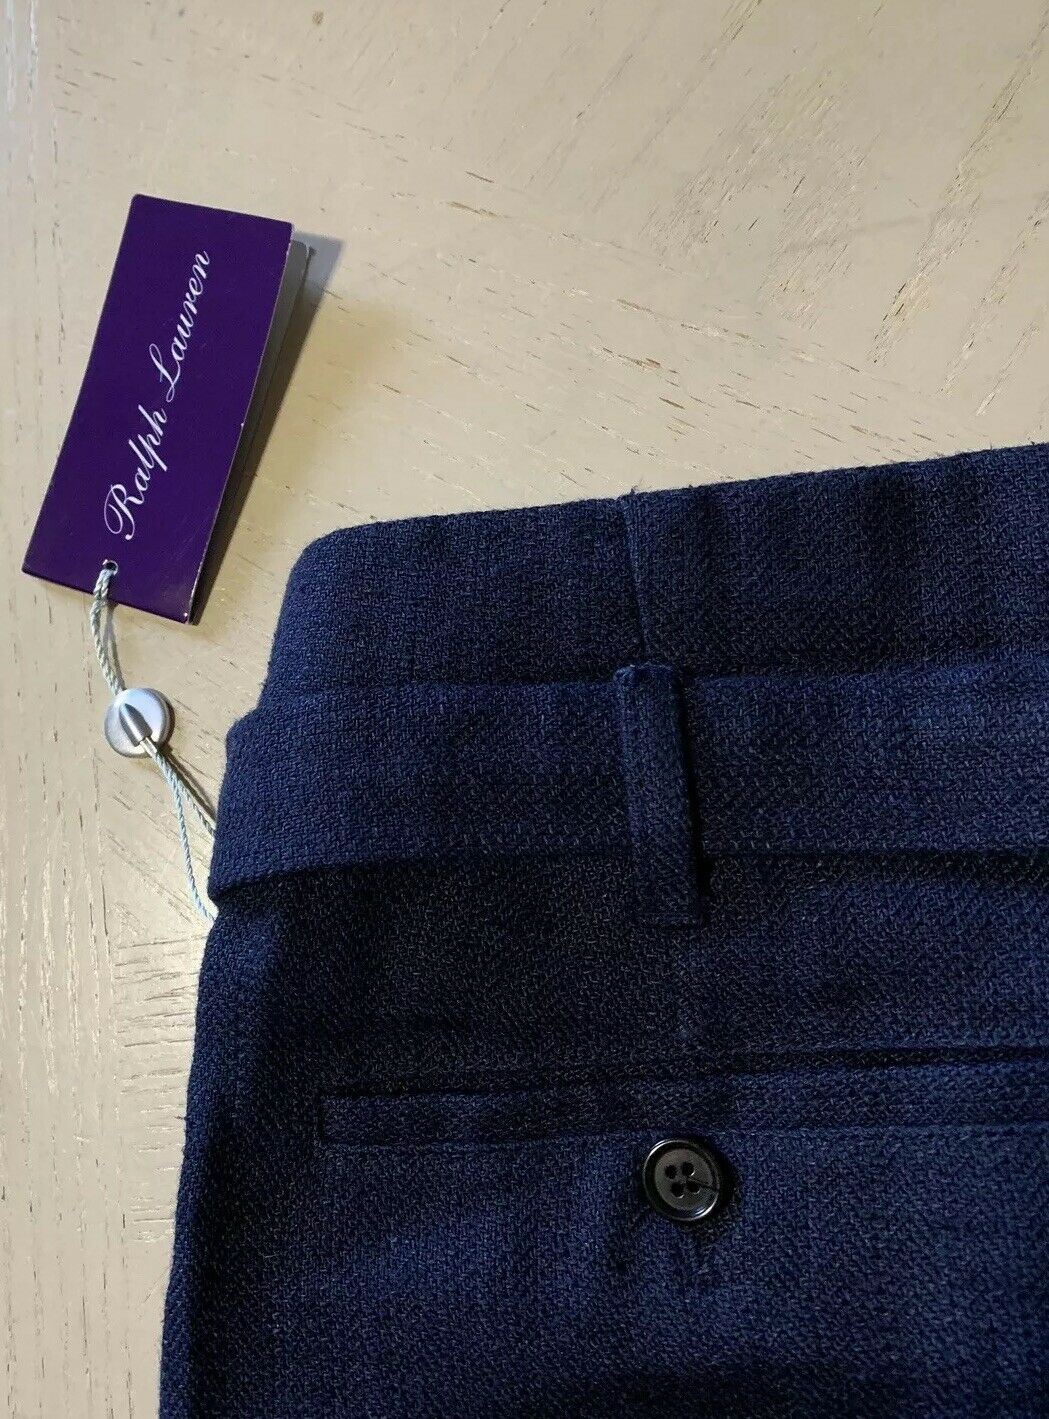 NWT $595 Ralph Lauren Purple Label Мужские льняные брюки Темно-синие 38 США (54 евро) Италия